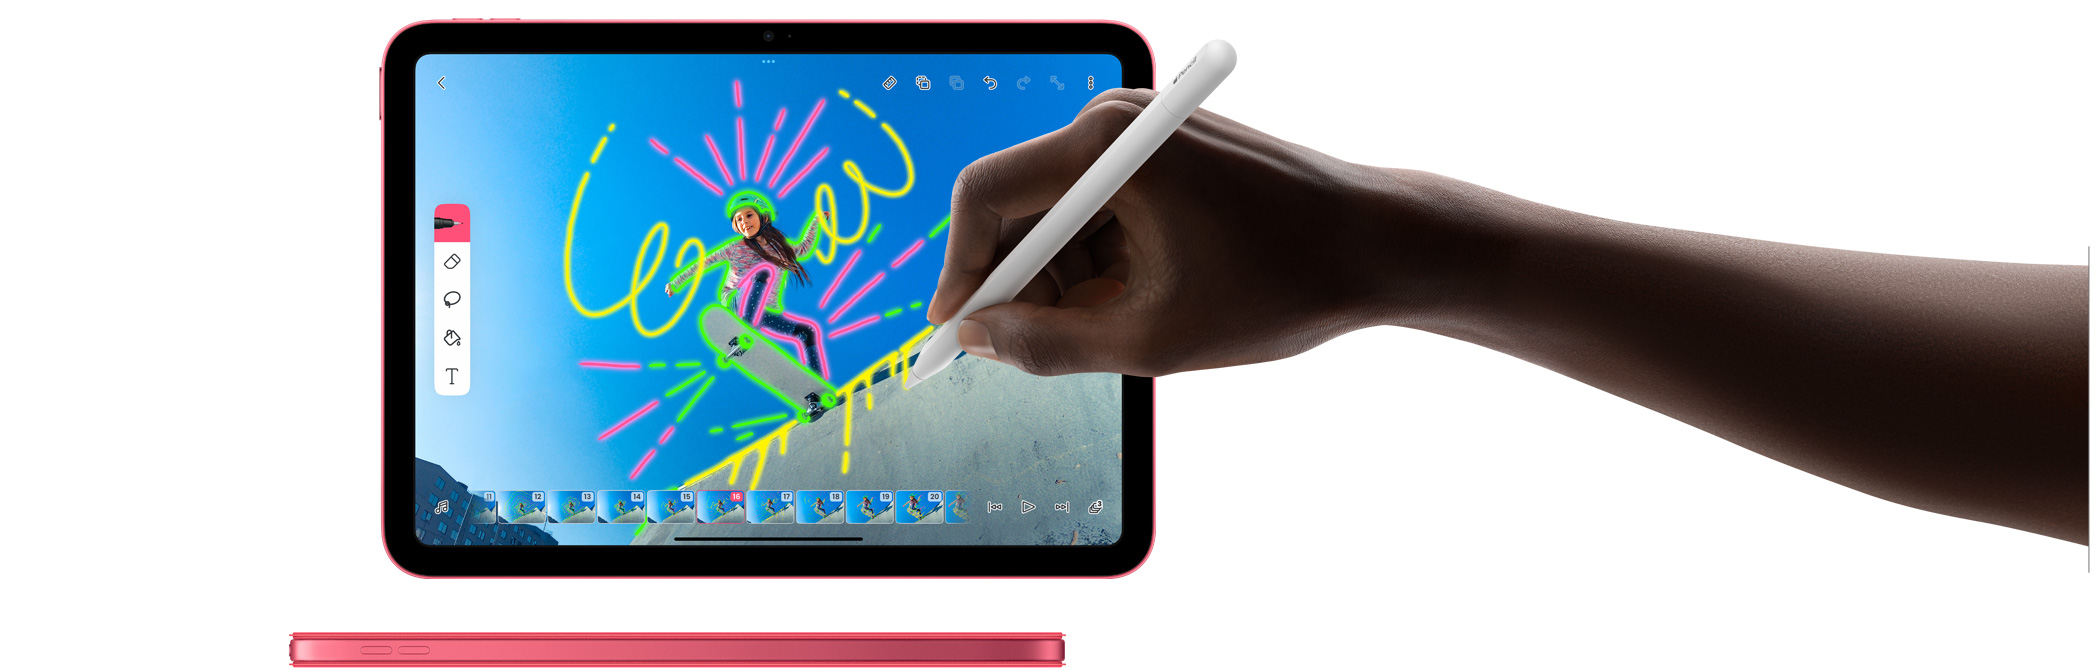 Menggunakan Apple Pencil dalam FlipaClip dan tampilan samping iPad pink dengan cover Smart Folio berwarna senada